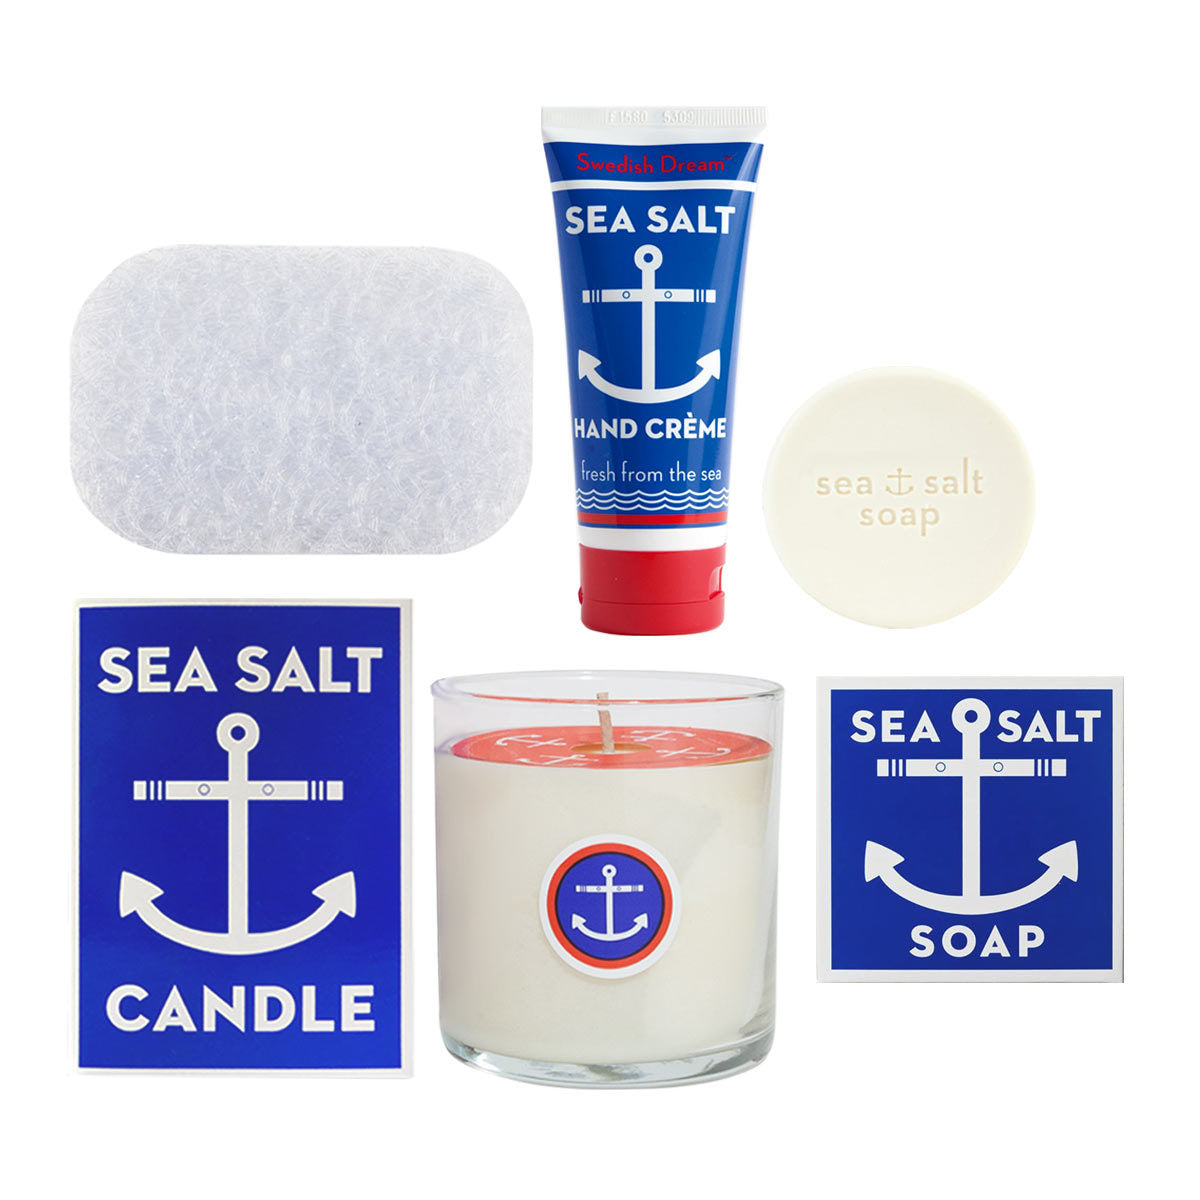 Primary image of Sea Salt Gift Box